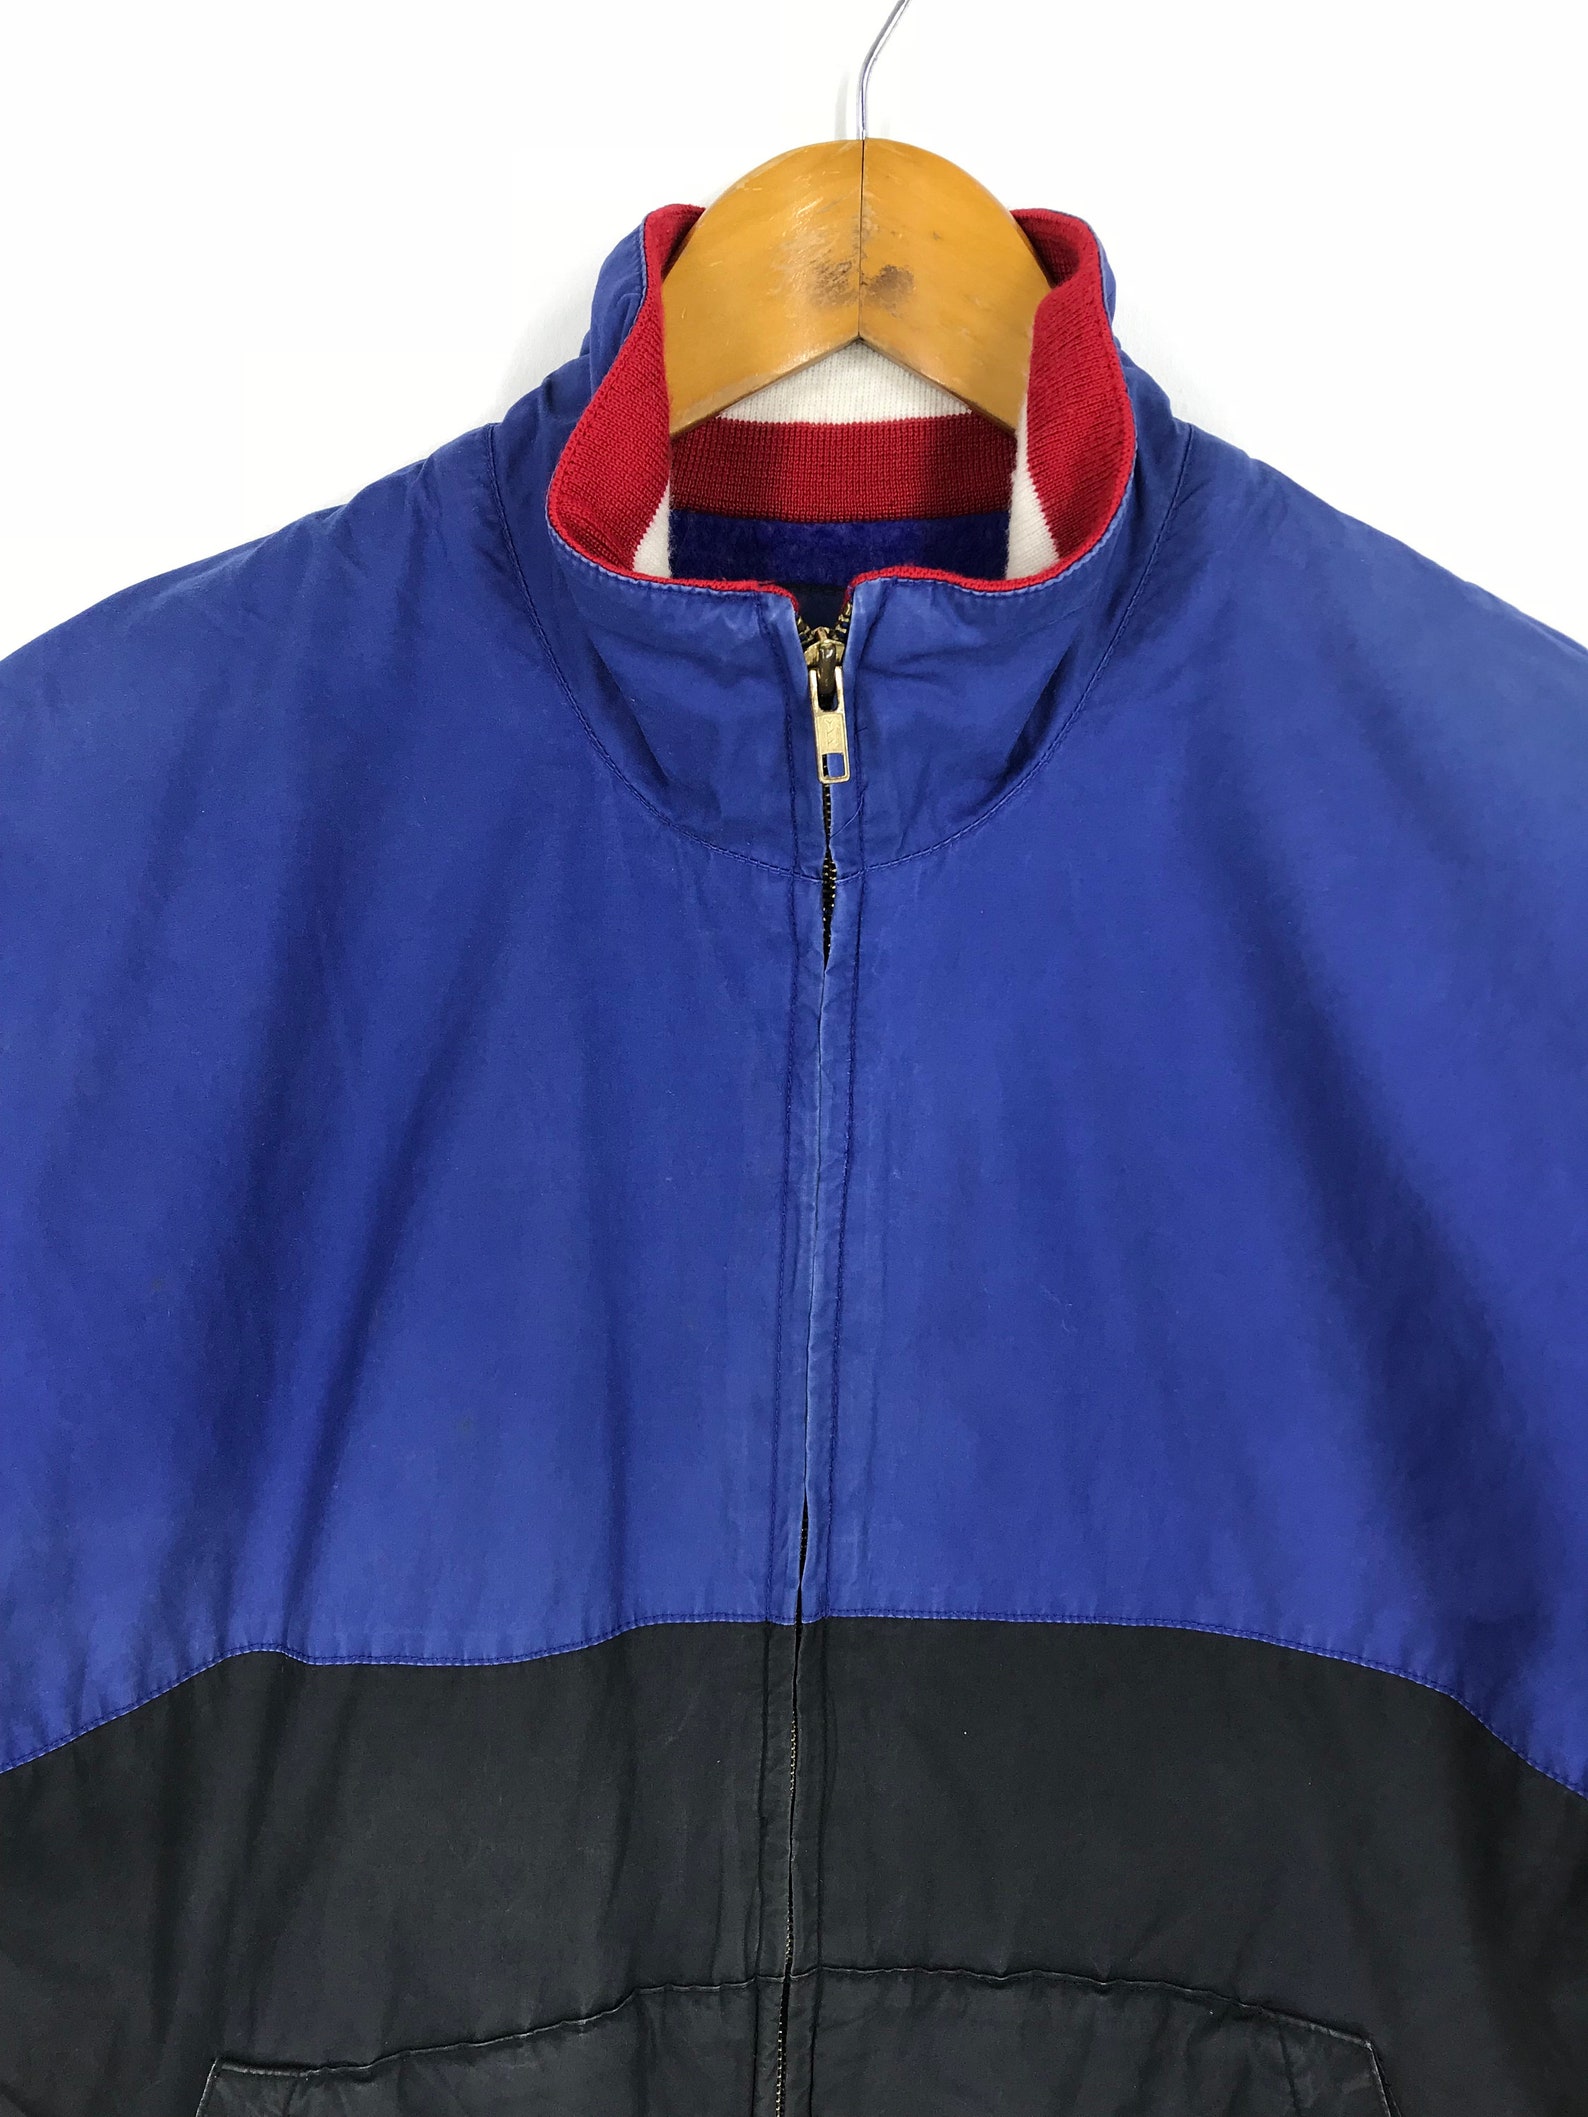 Polo Ralph Lauren Ski Jacket Medium Vintage 1990's Polo | Etsy